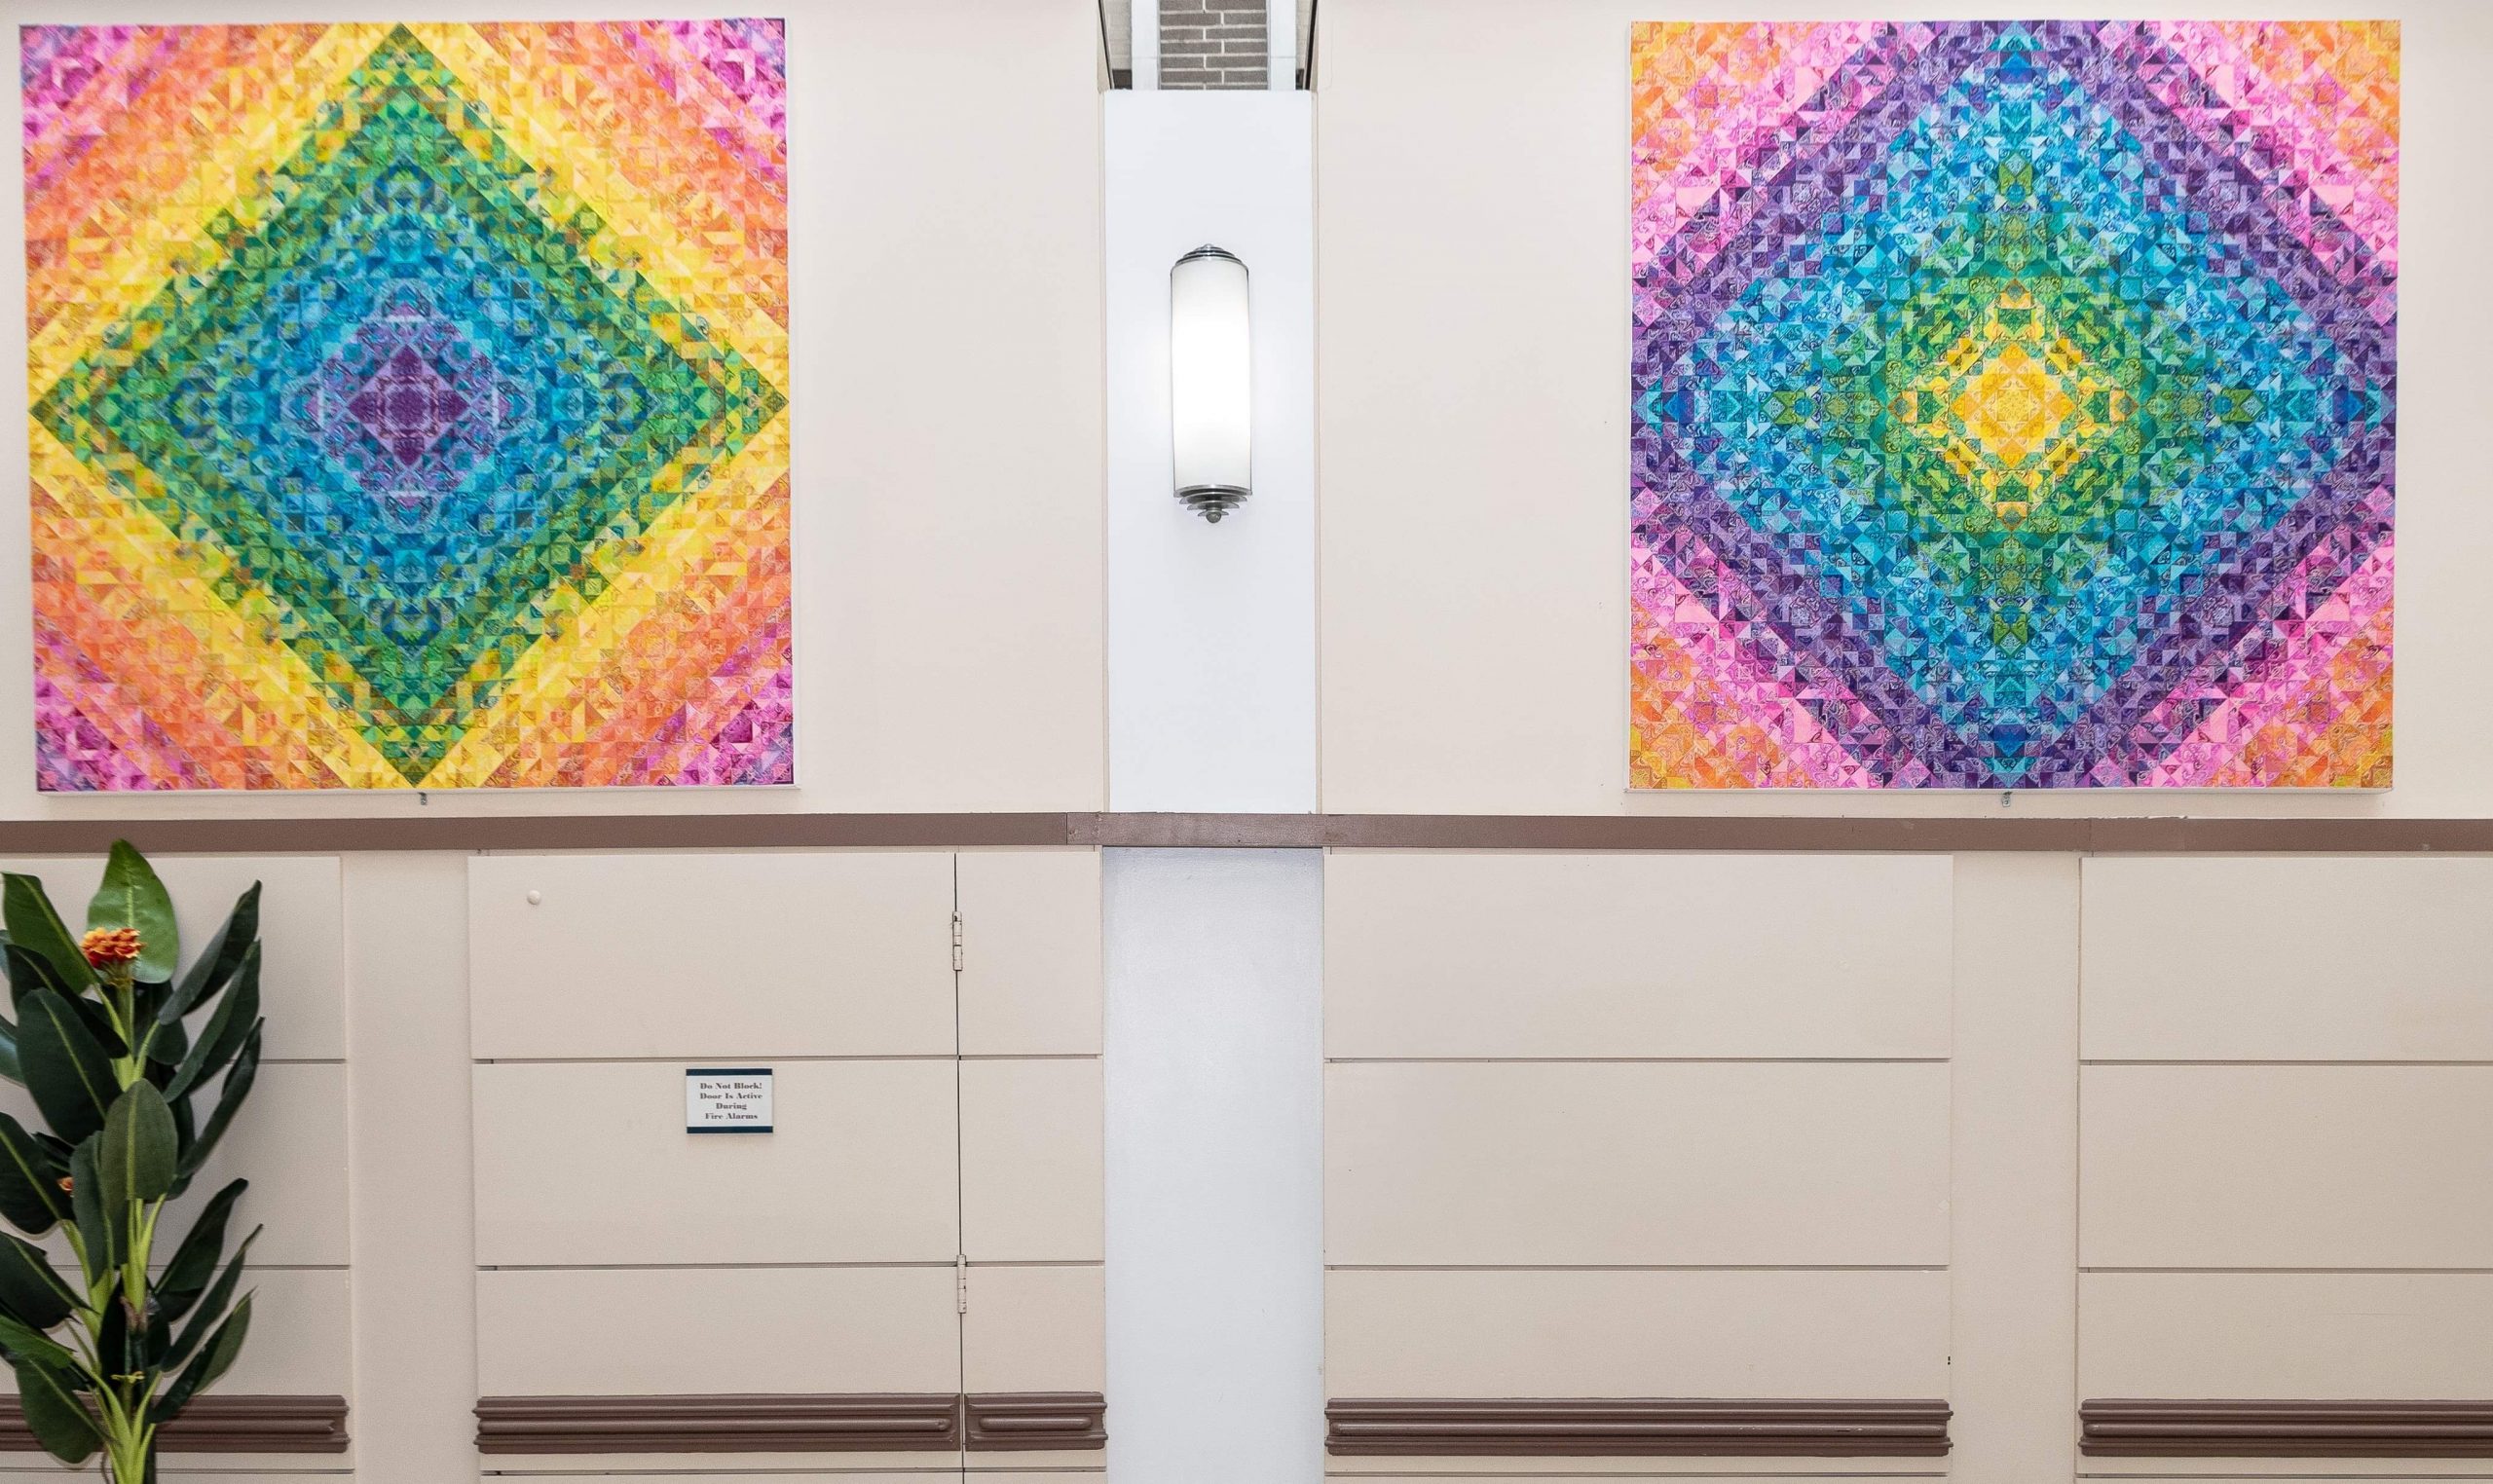 Wyckoff Height’s Medical Center Lobby Art